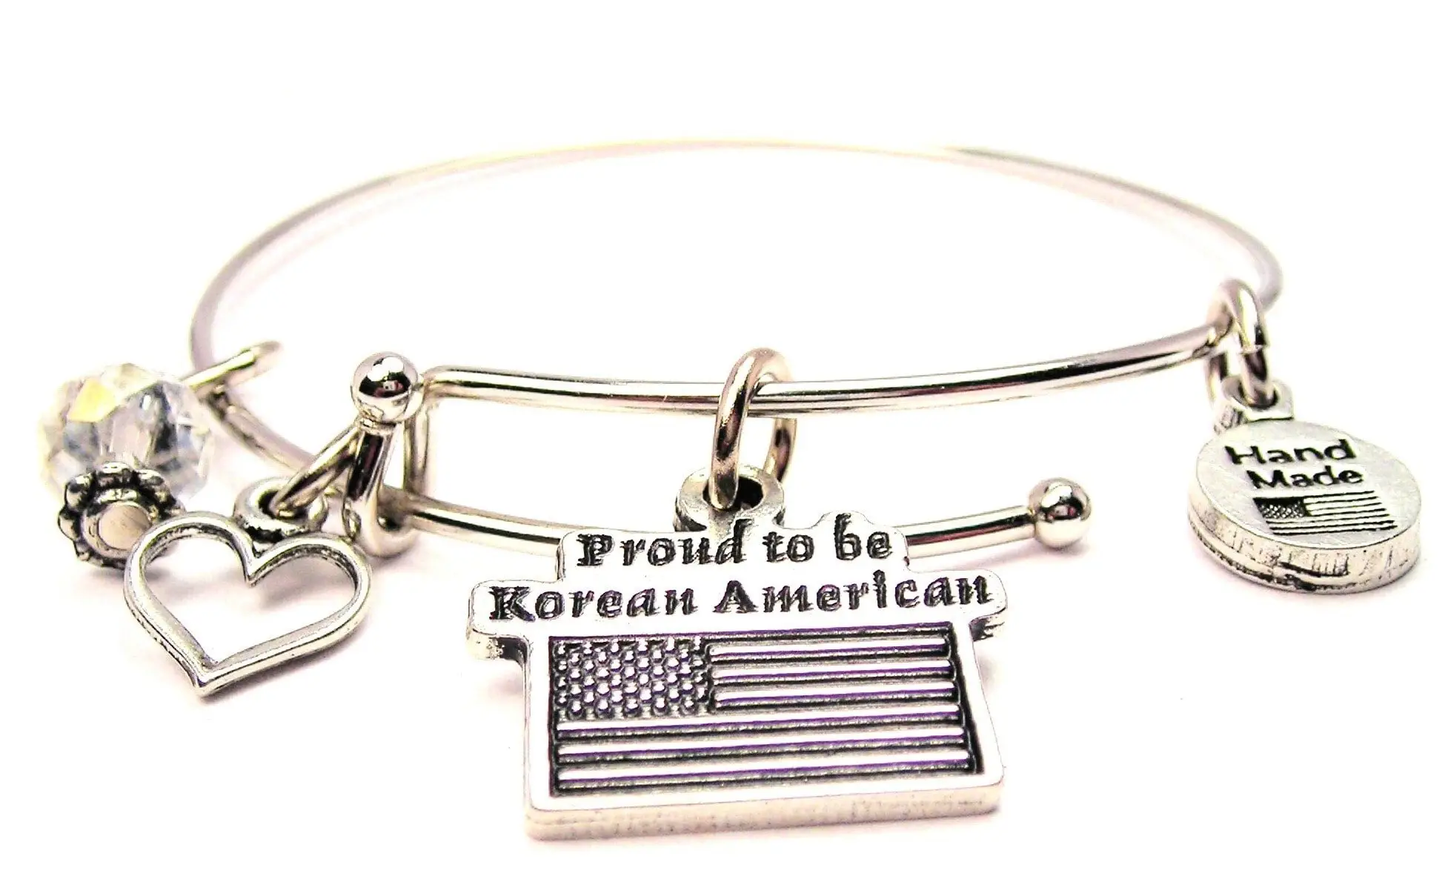 Expandable Bangle Bracelet "Proud to be Korean American